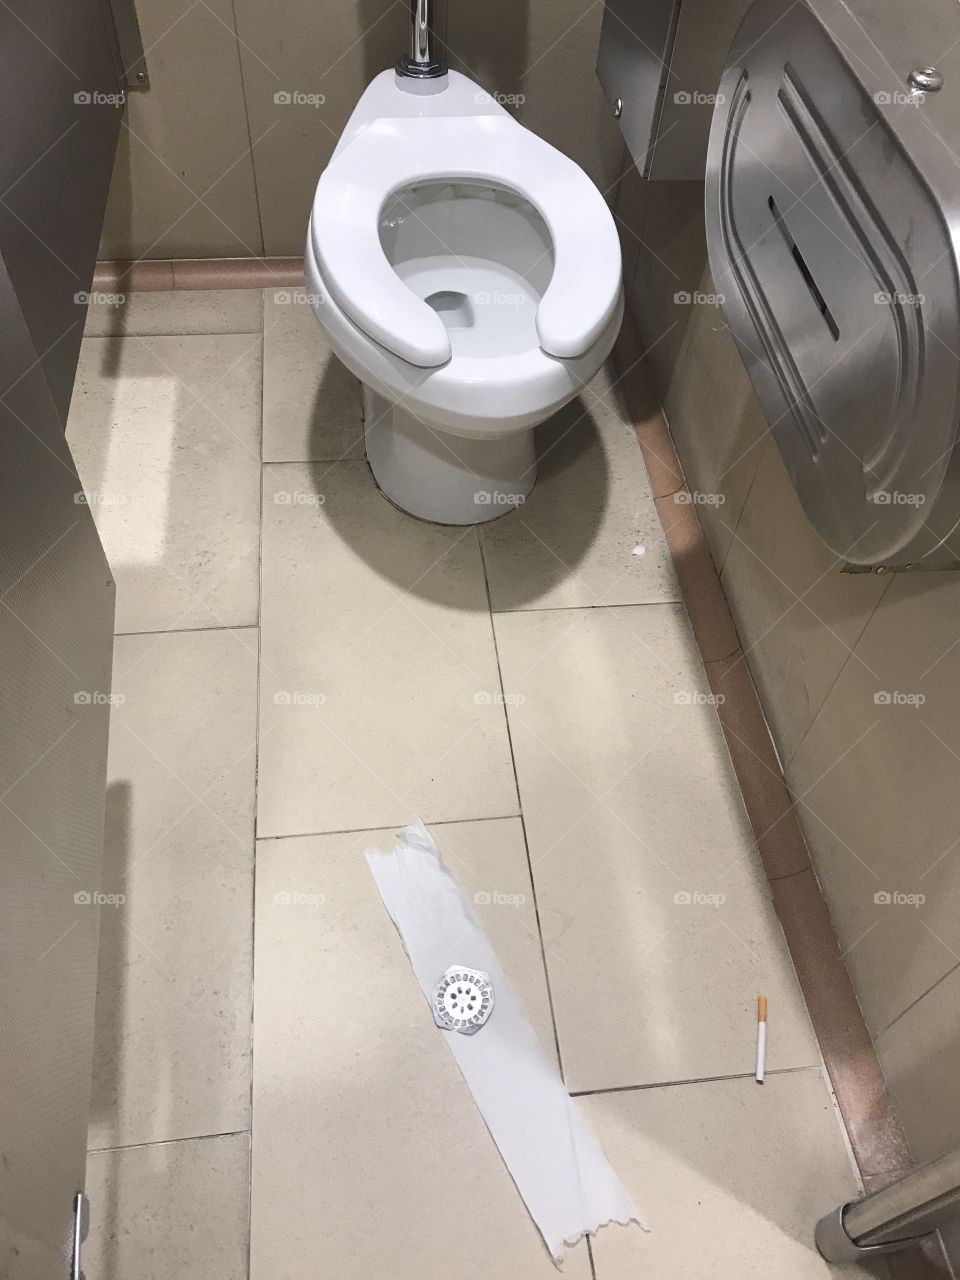 A weird bathroom stall at Walmart